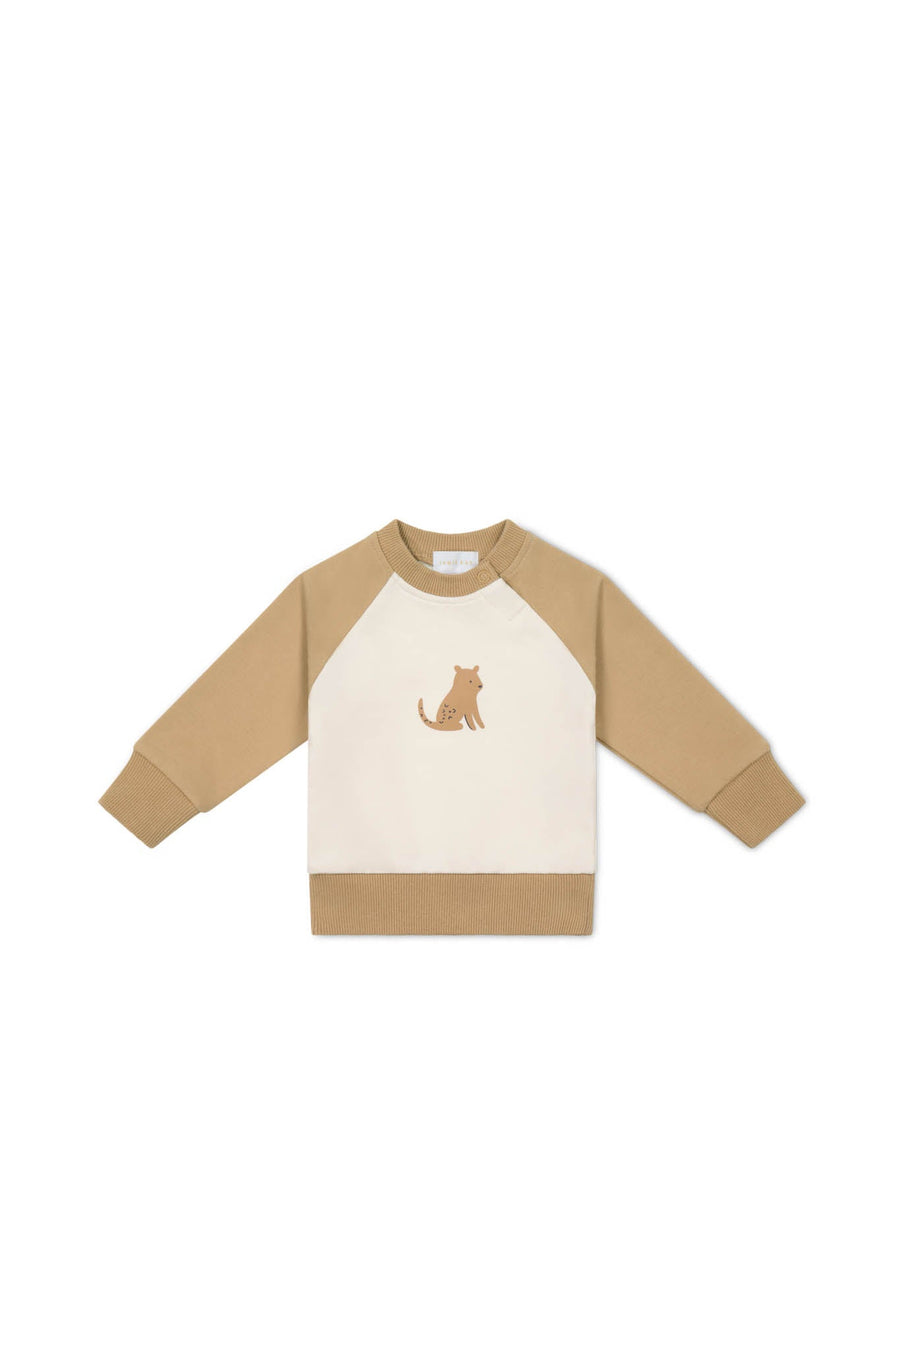 Organic Cotton Tao Sweatshirt - Bronzed Leopard Childrens Sweatshirt from Jamie Kay USA